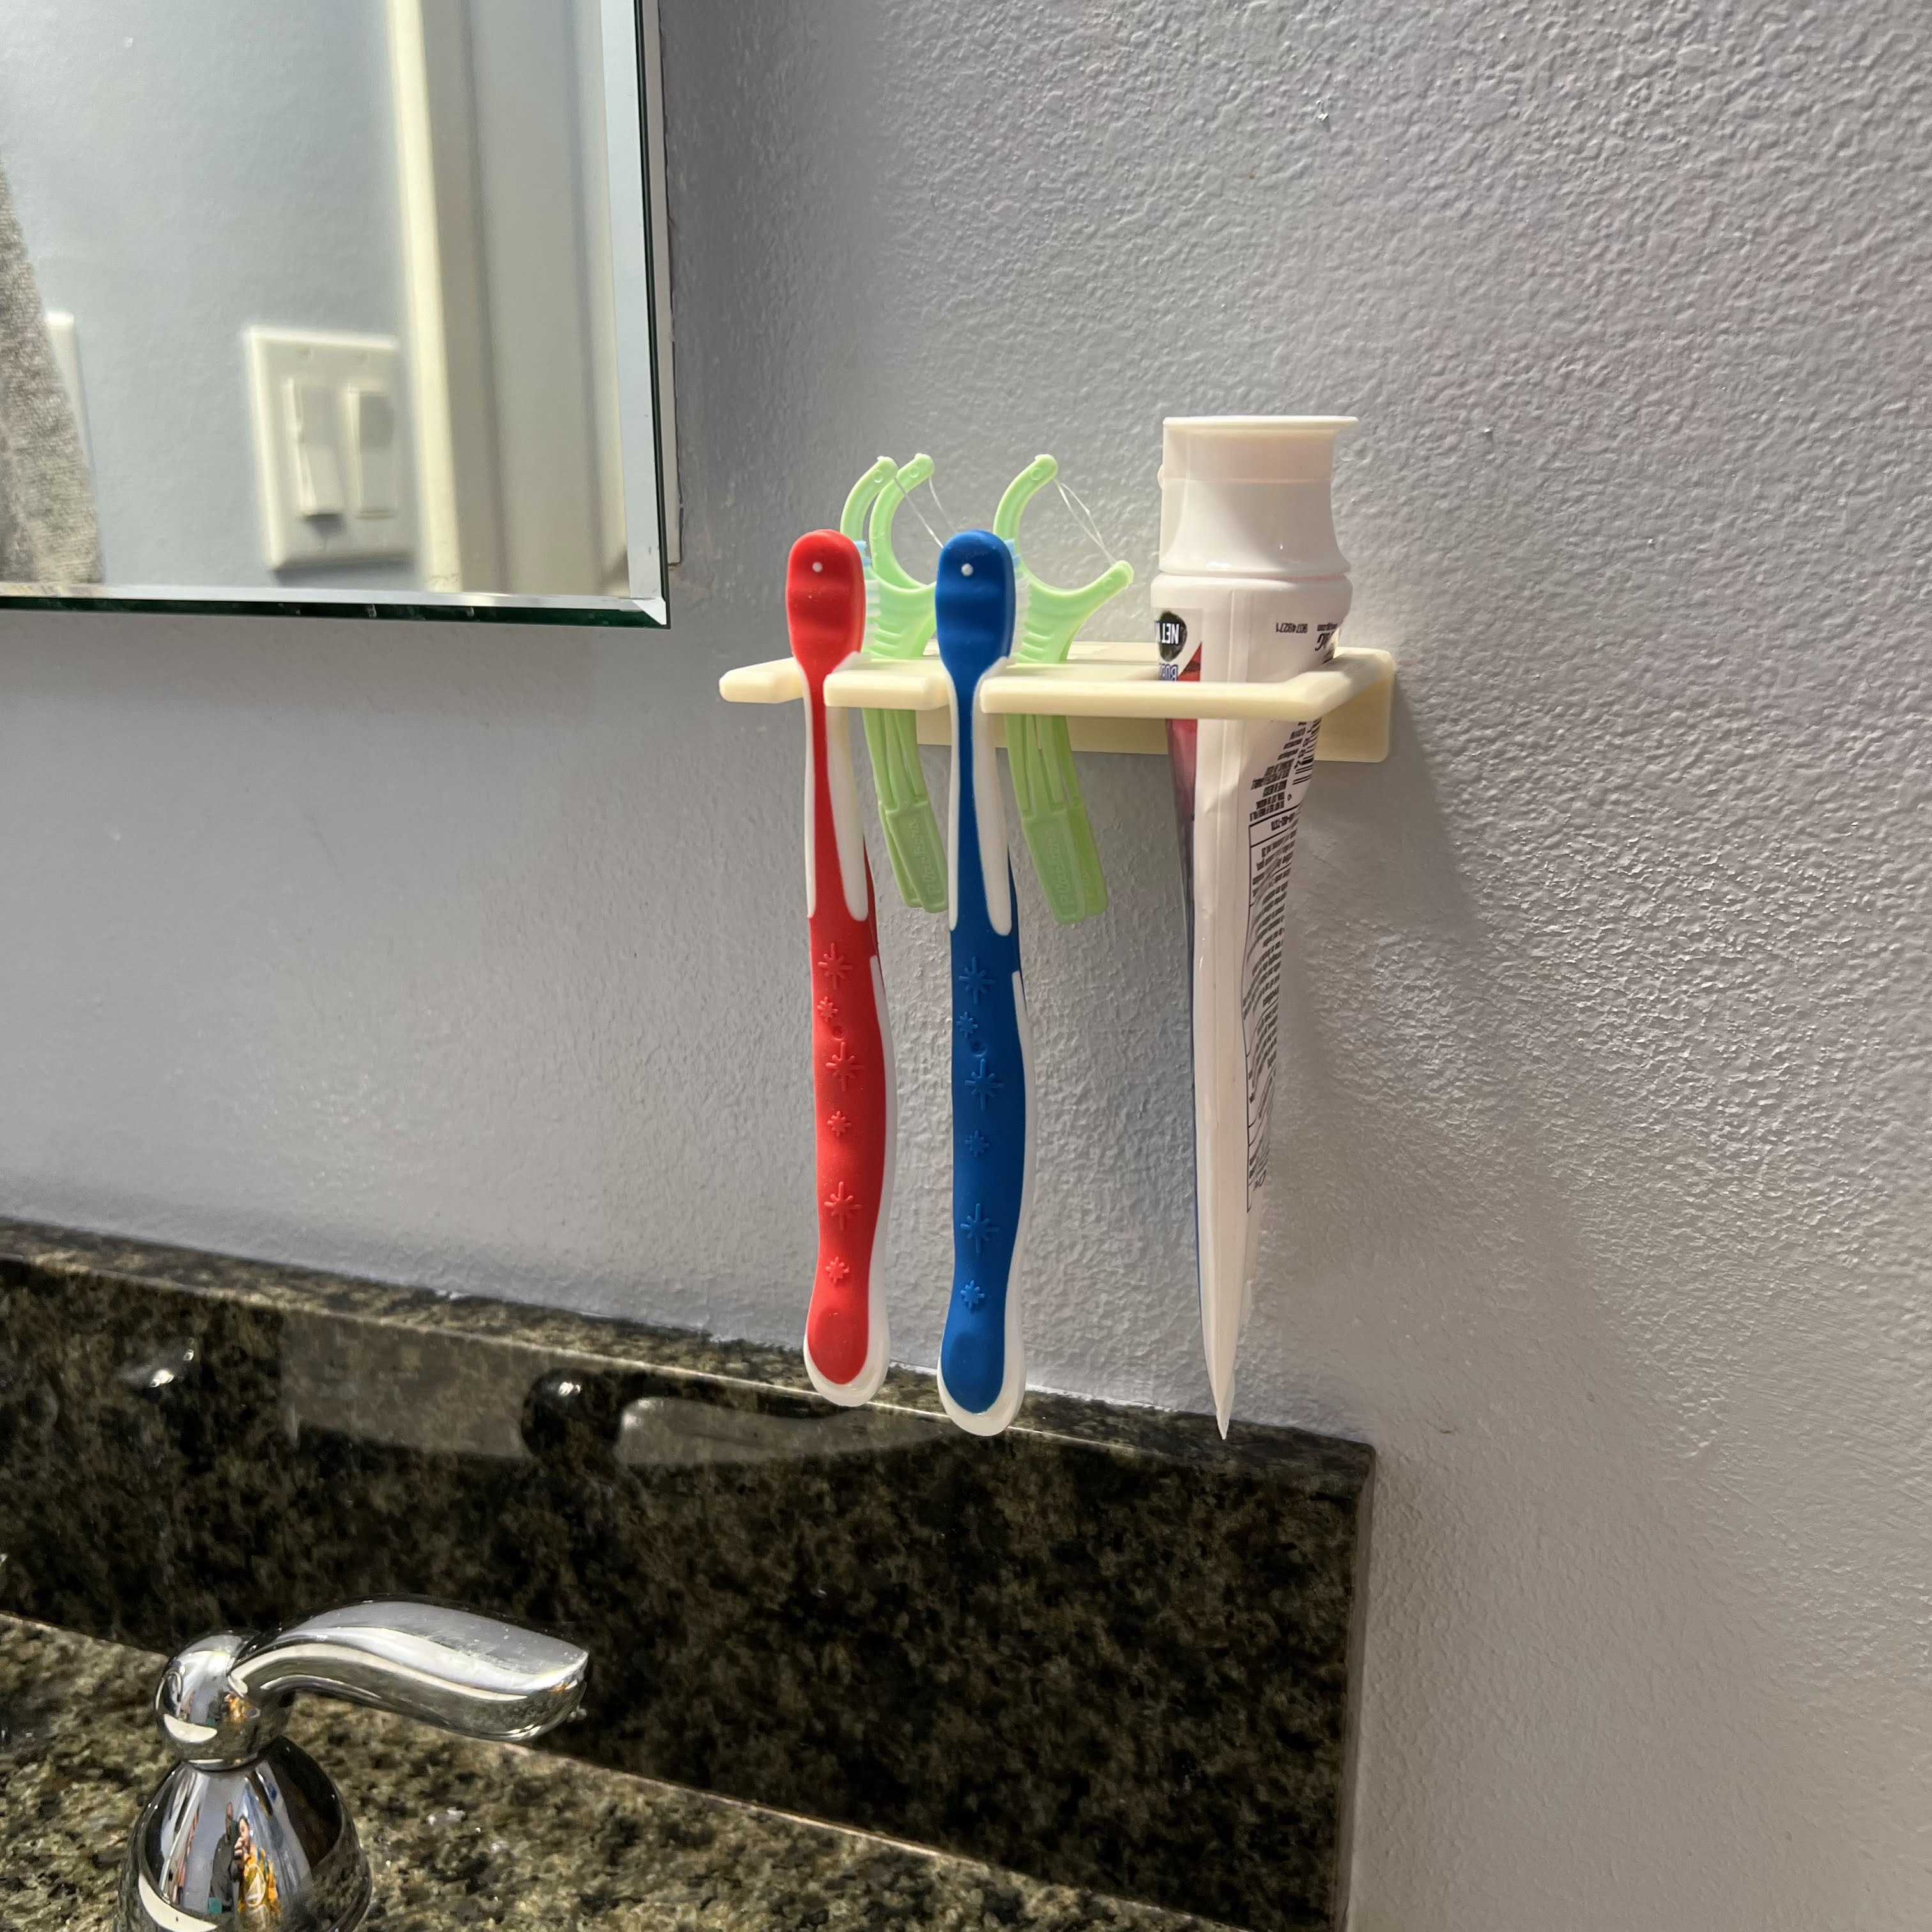 Customizable Wall Mount Toothbrush Organizer